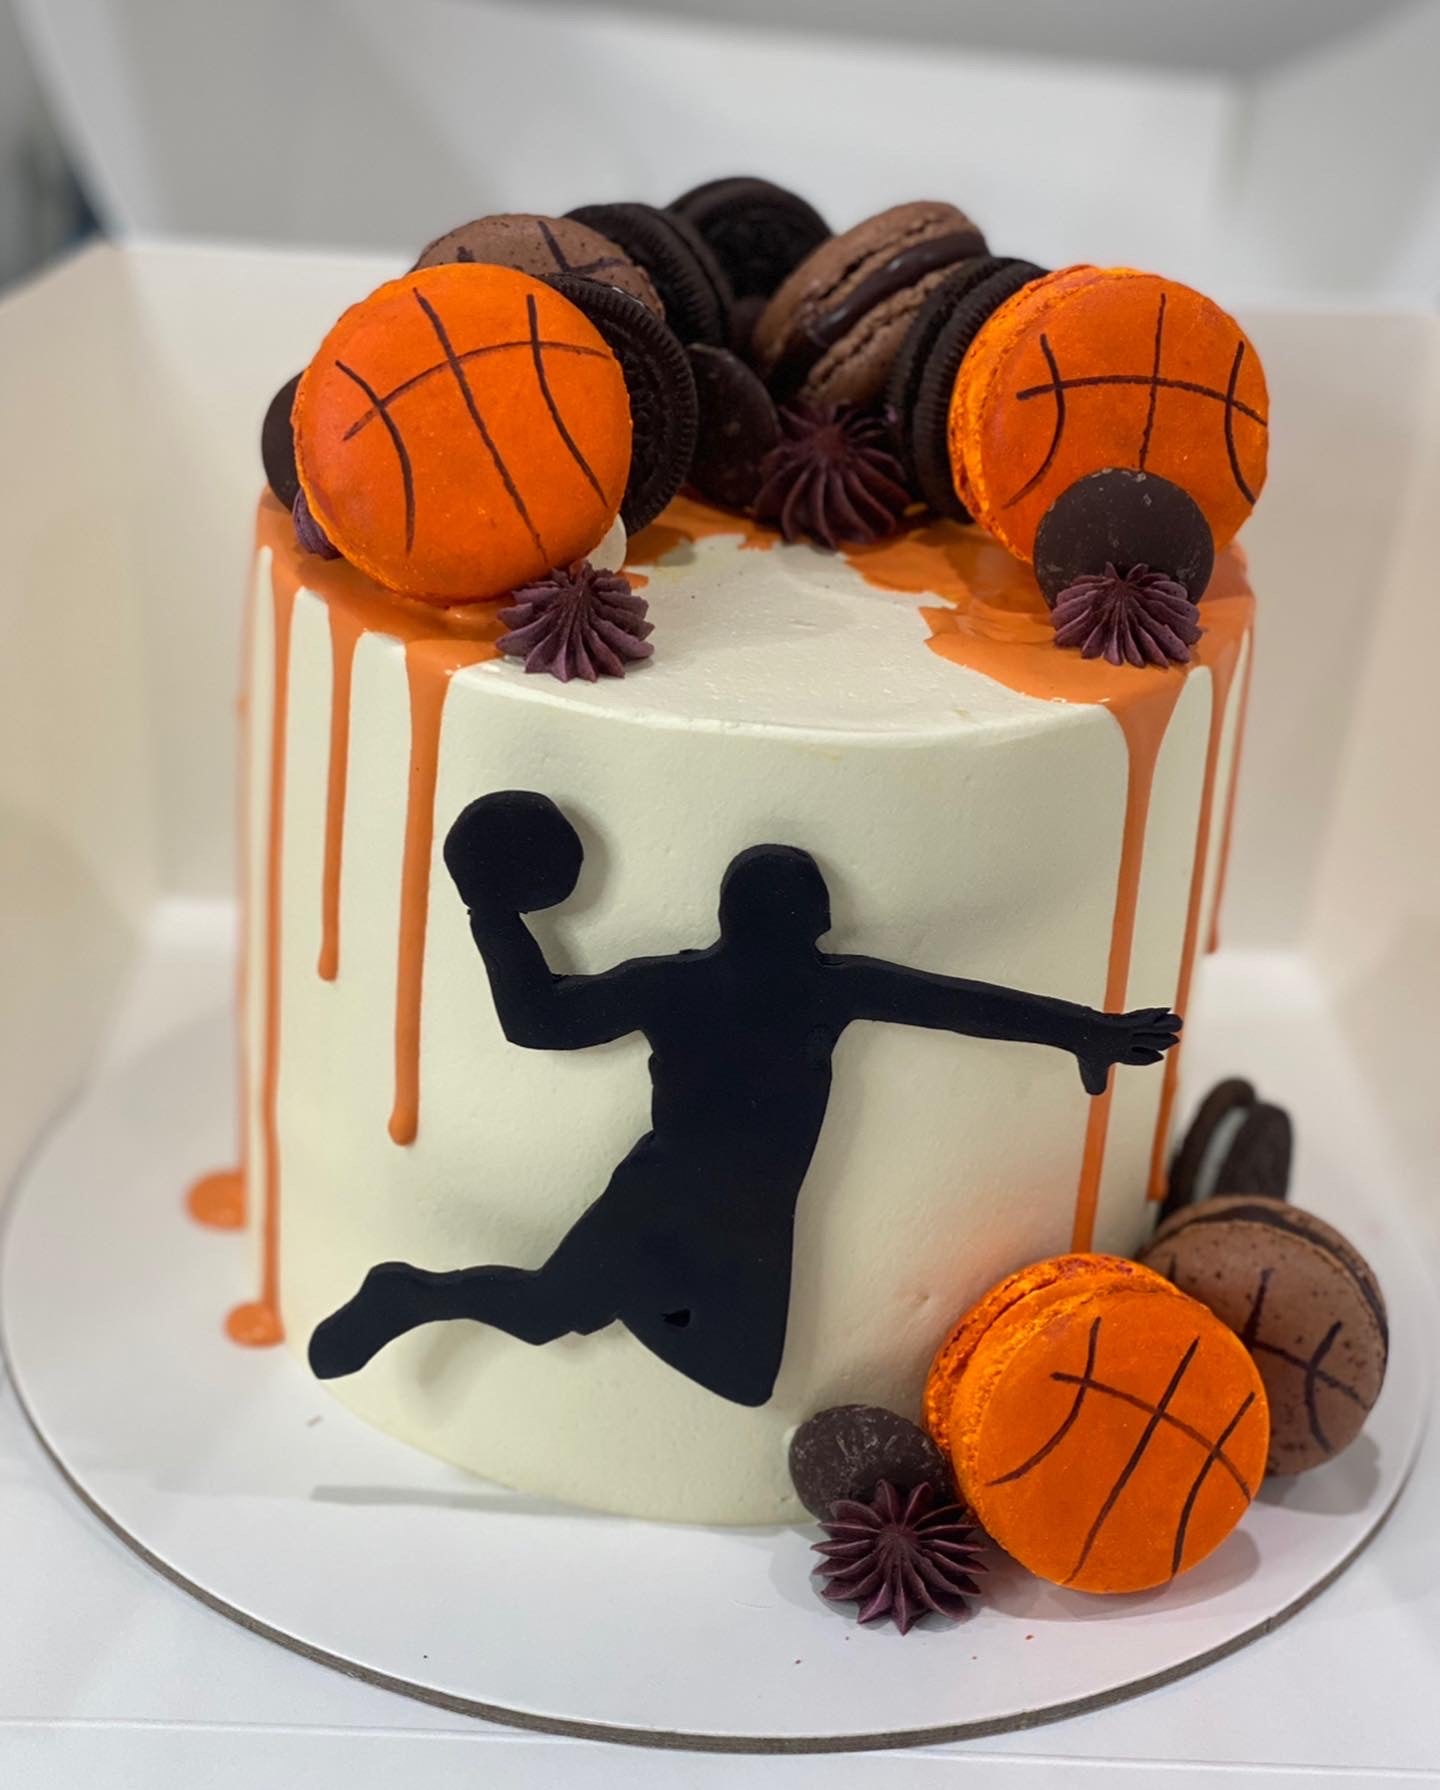 Best Basket Ball Theme Cake In Gurgaon | Order Online